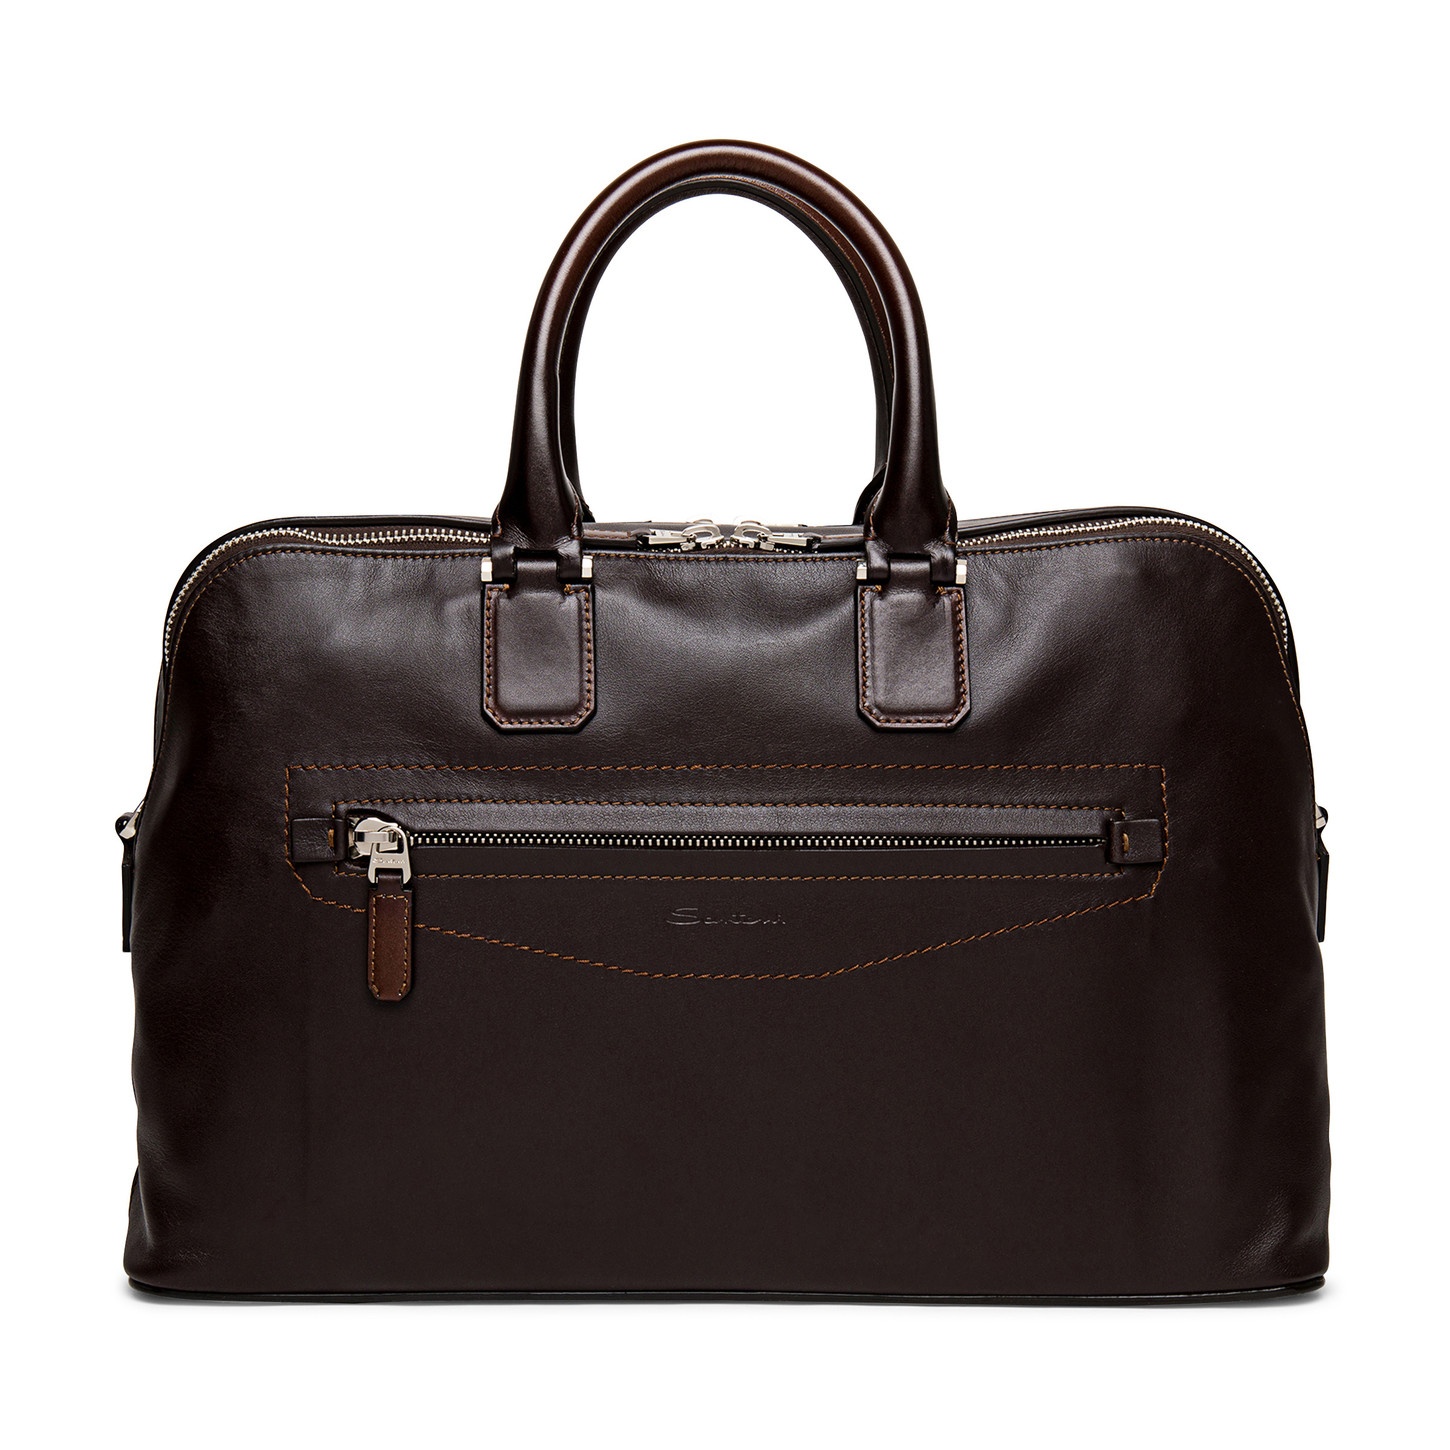 Brown leather laptop bag - 1